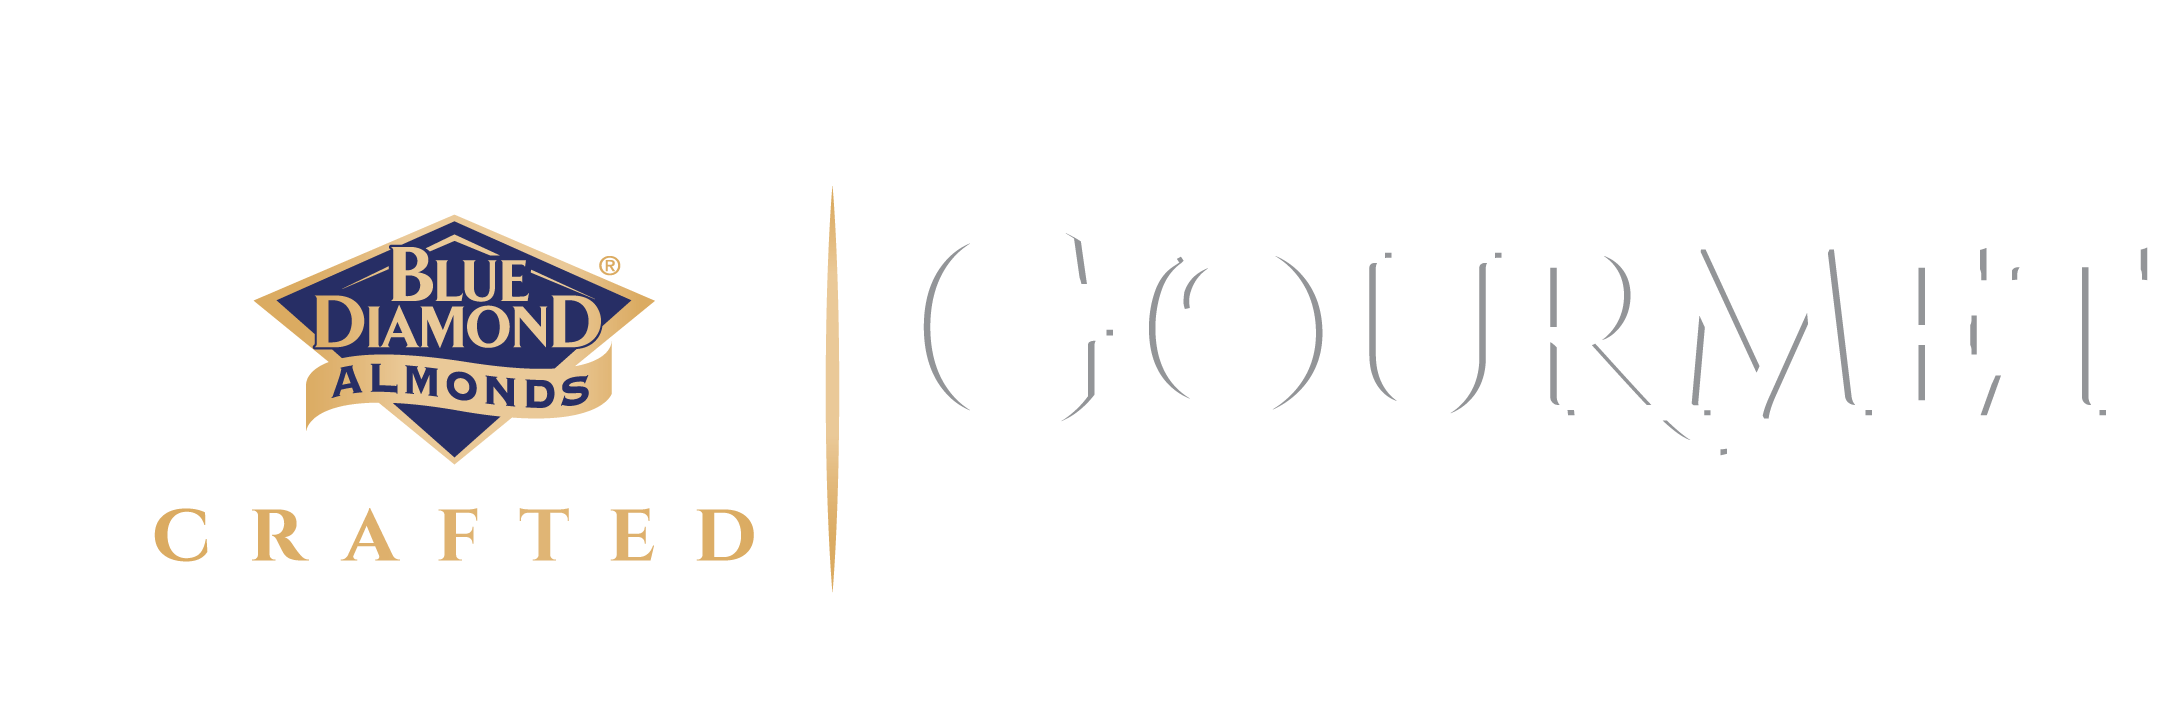 Blue Diamond Brand Logo - Gourmet Snack Almonds | Nonpareil Almonds | Blue Diamond